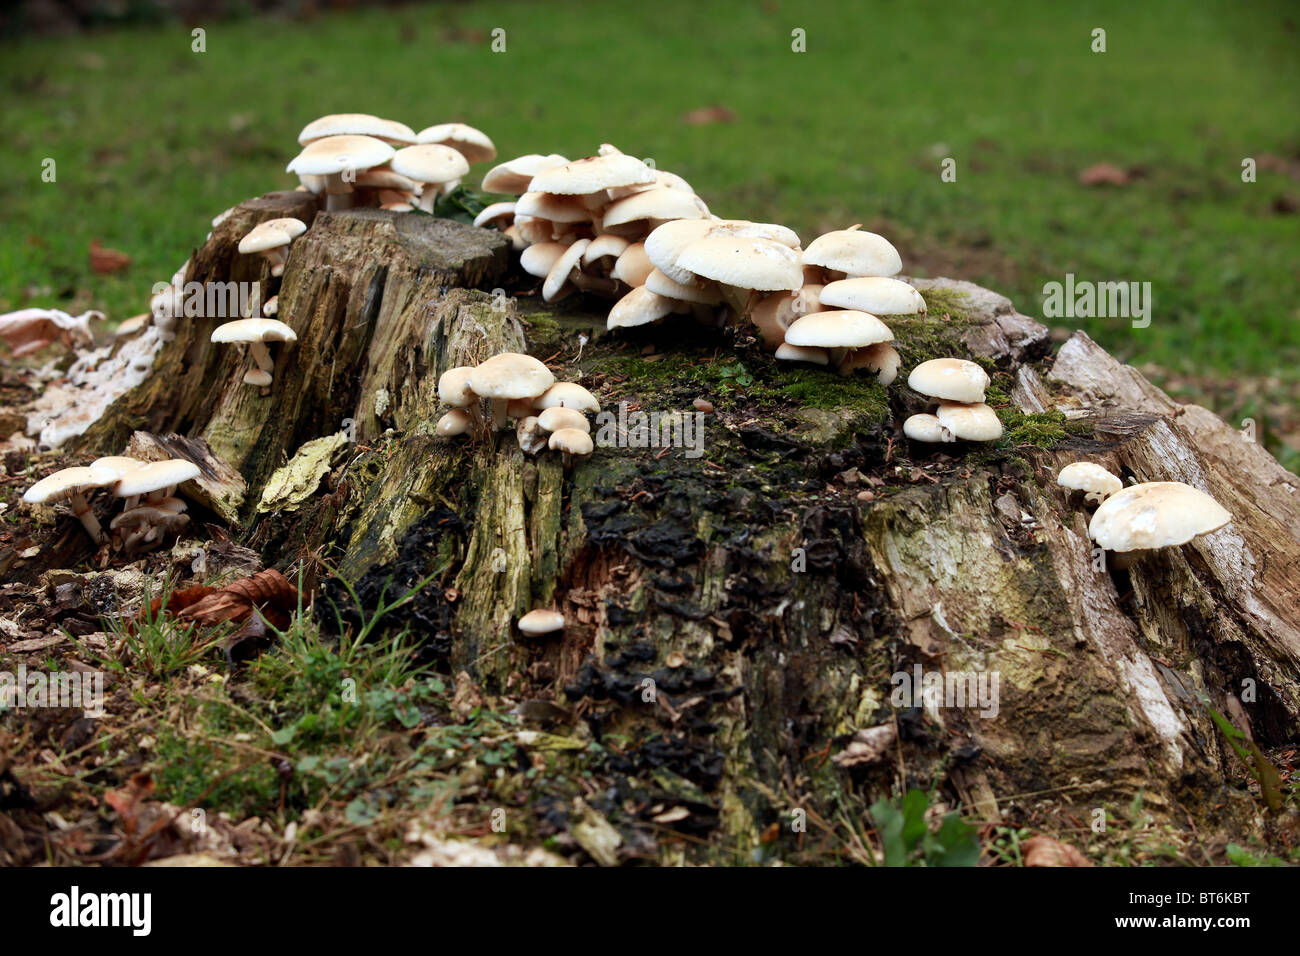 Mushrooms growing wild on a tree stump. Stock Photo